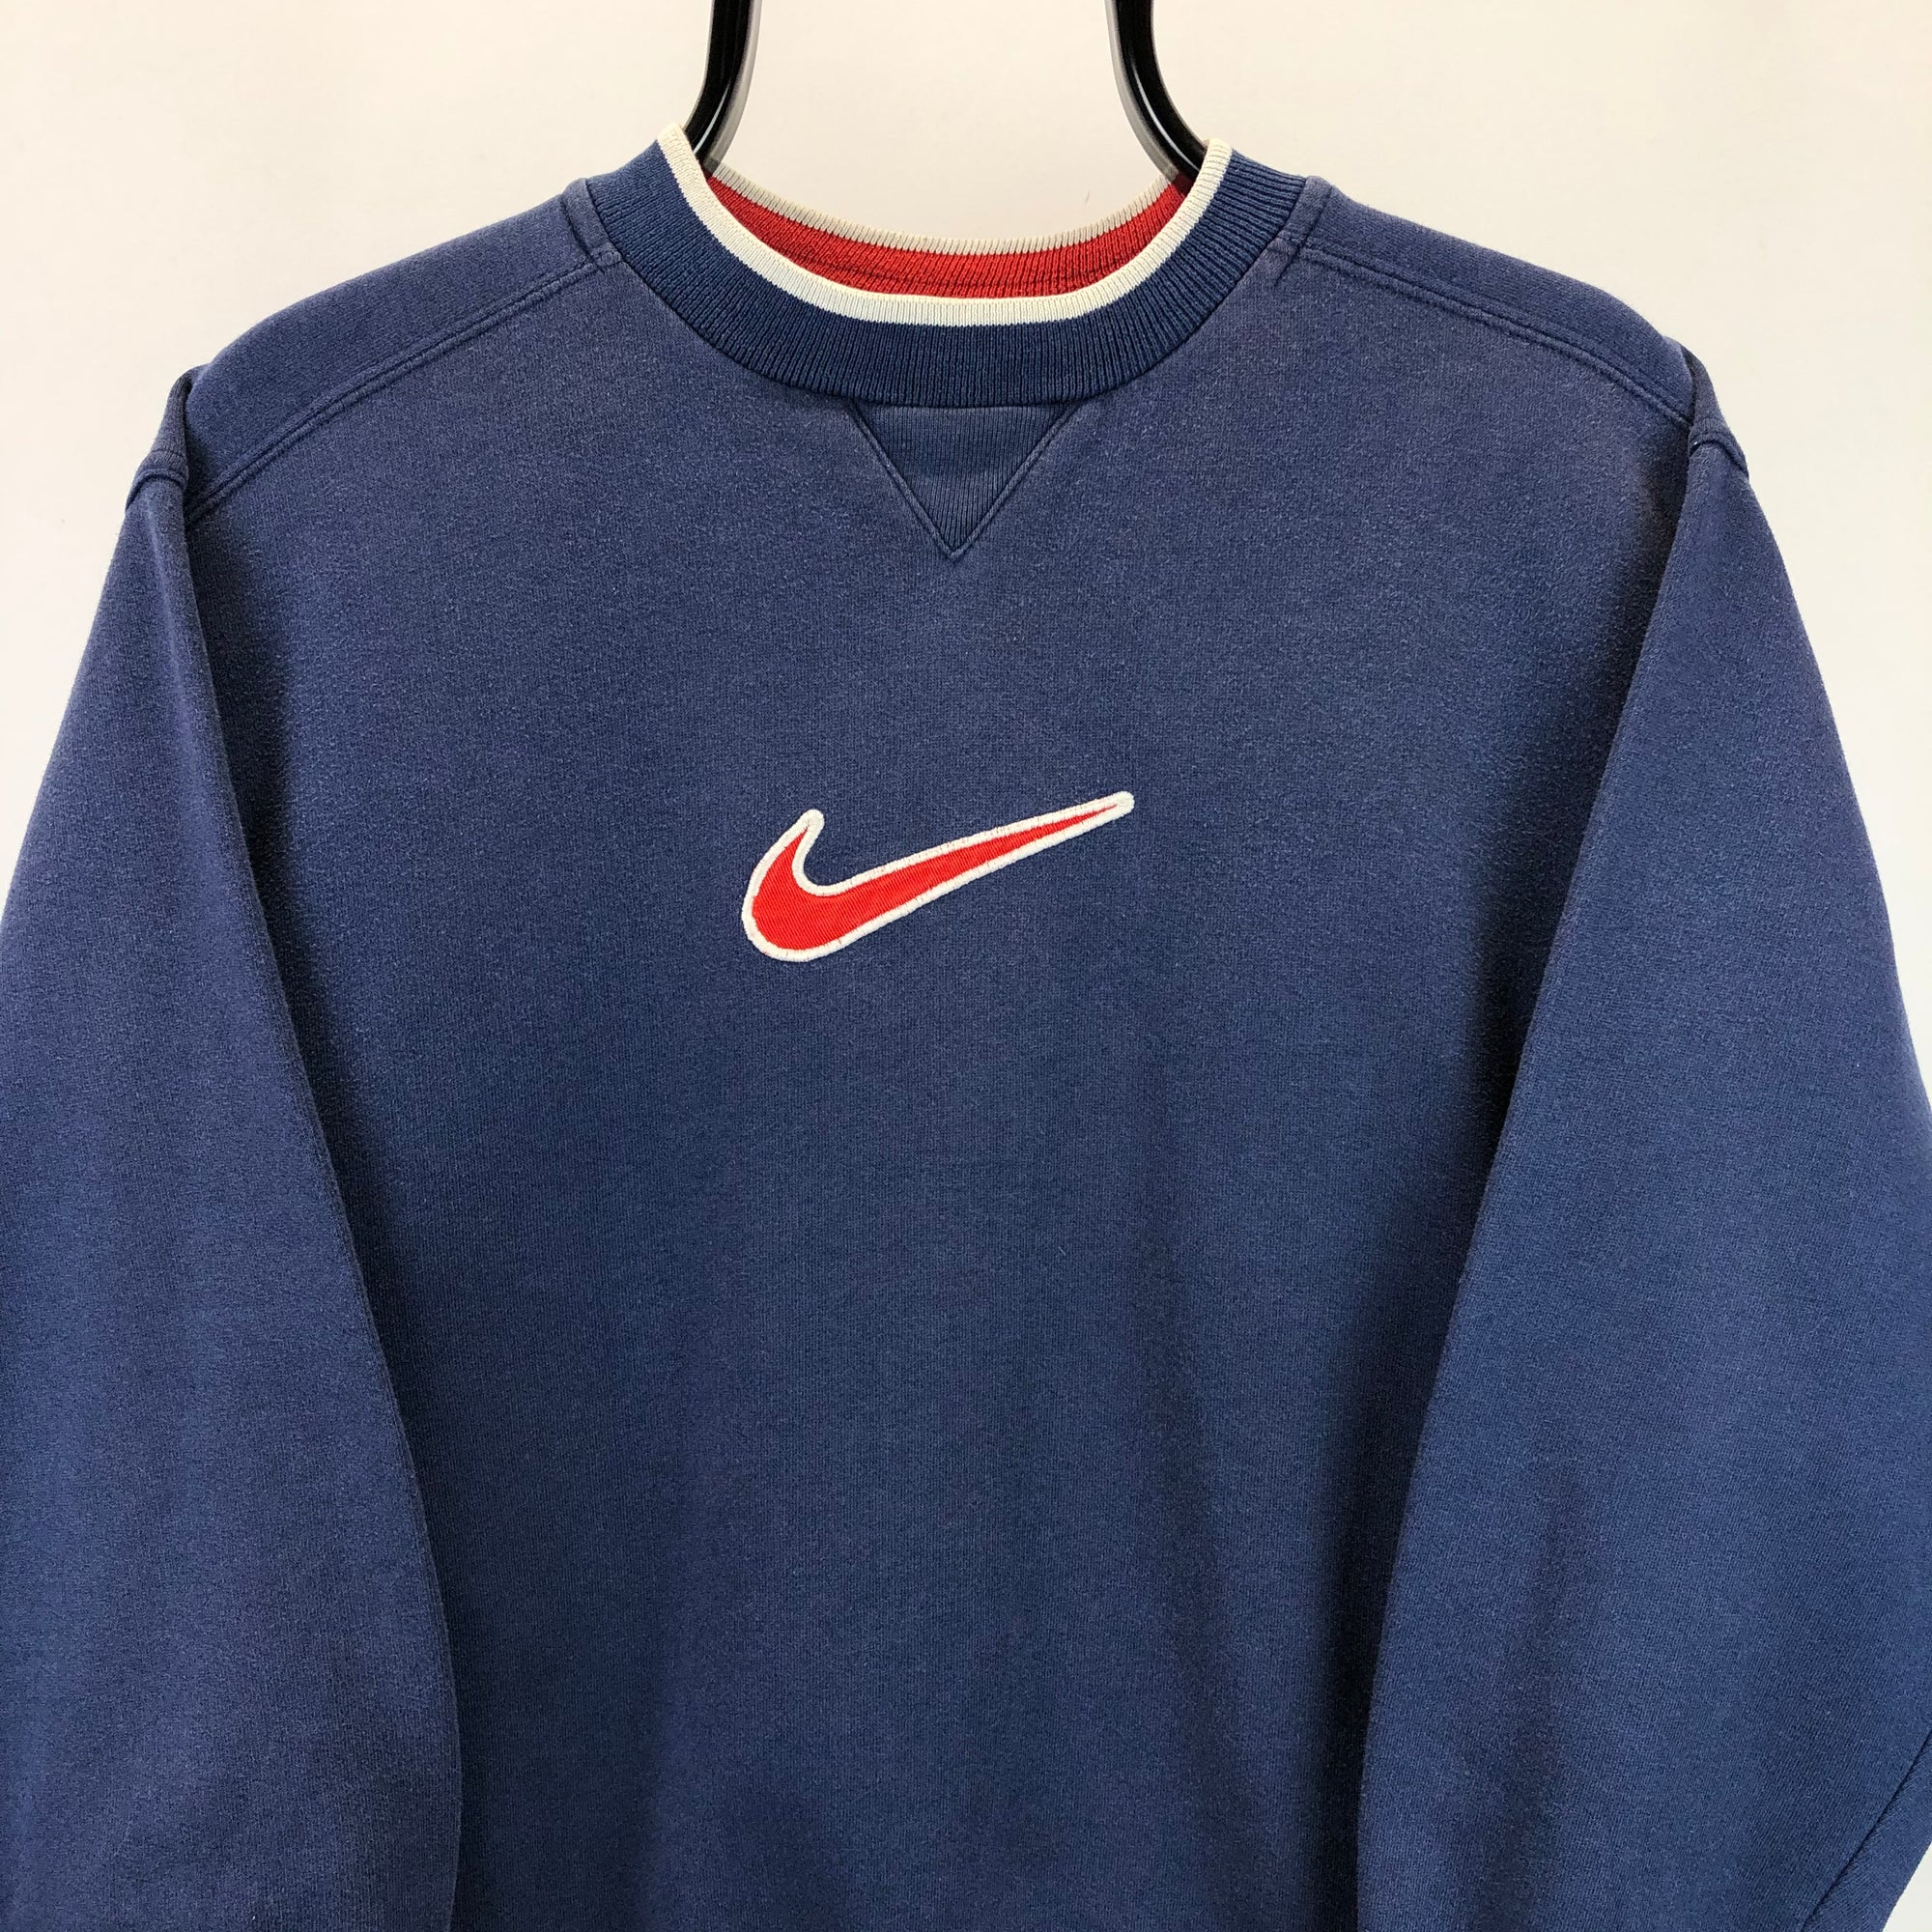 Vintage 90s Nike Embroidered Centre Swoosh Sweatshirt in Navy/Red - Men's Small/Women's Medium